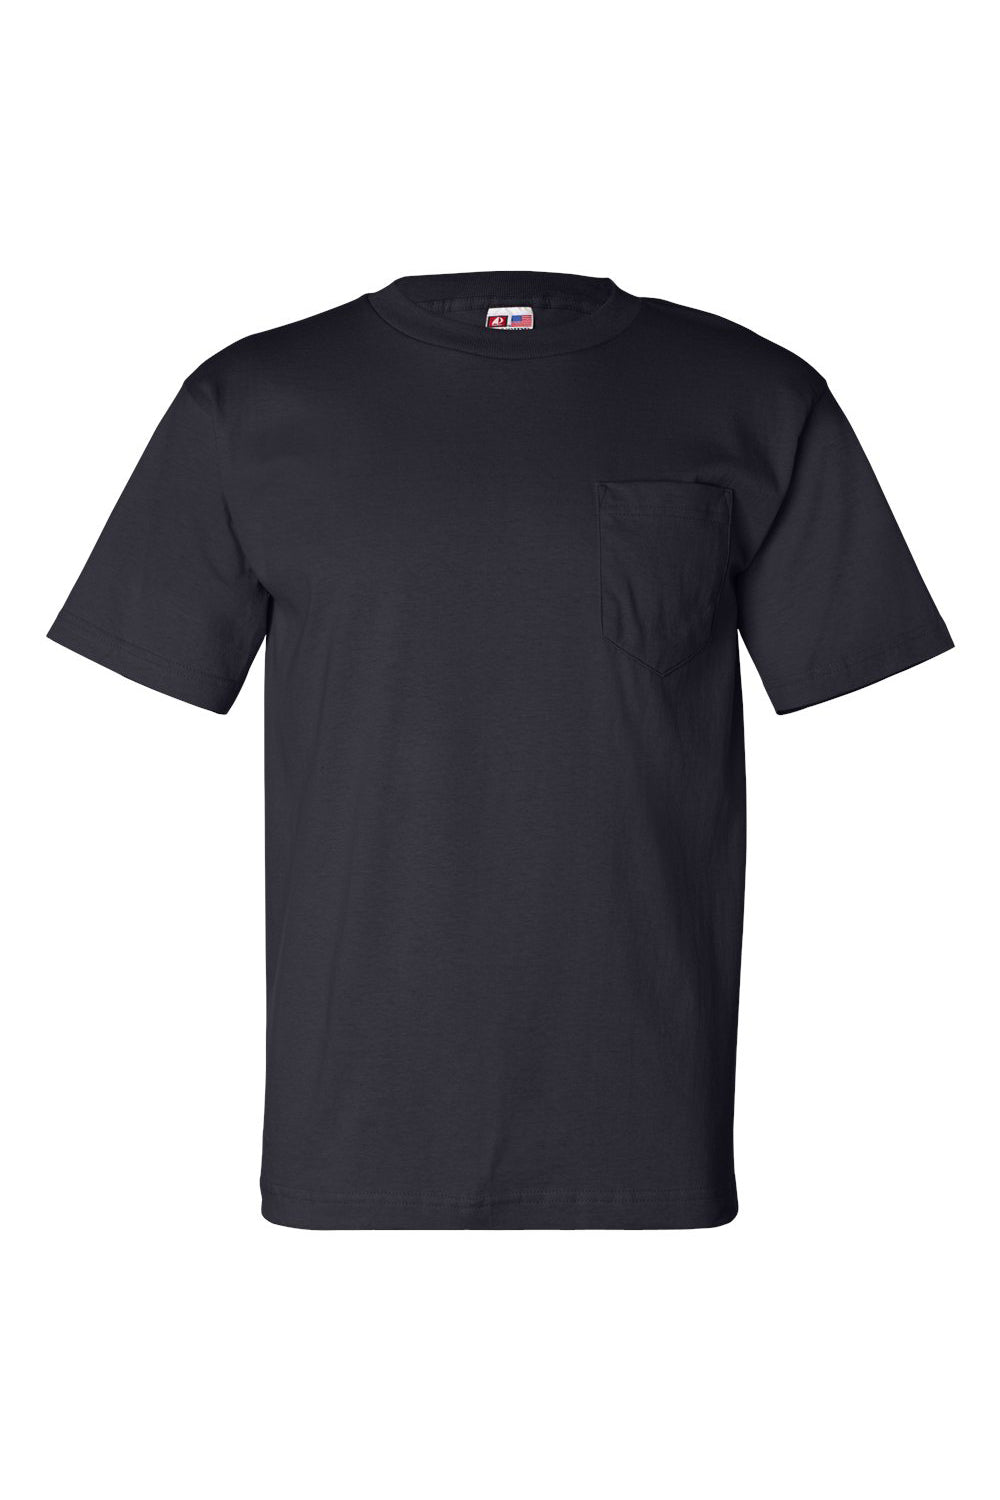 Bayside BA7100 Mens USA Made Short Sleeve Crewneck T-Shirt w/ Pocket Navy Blue Flat Front